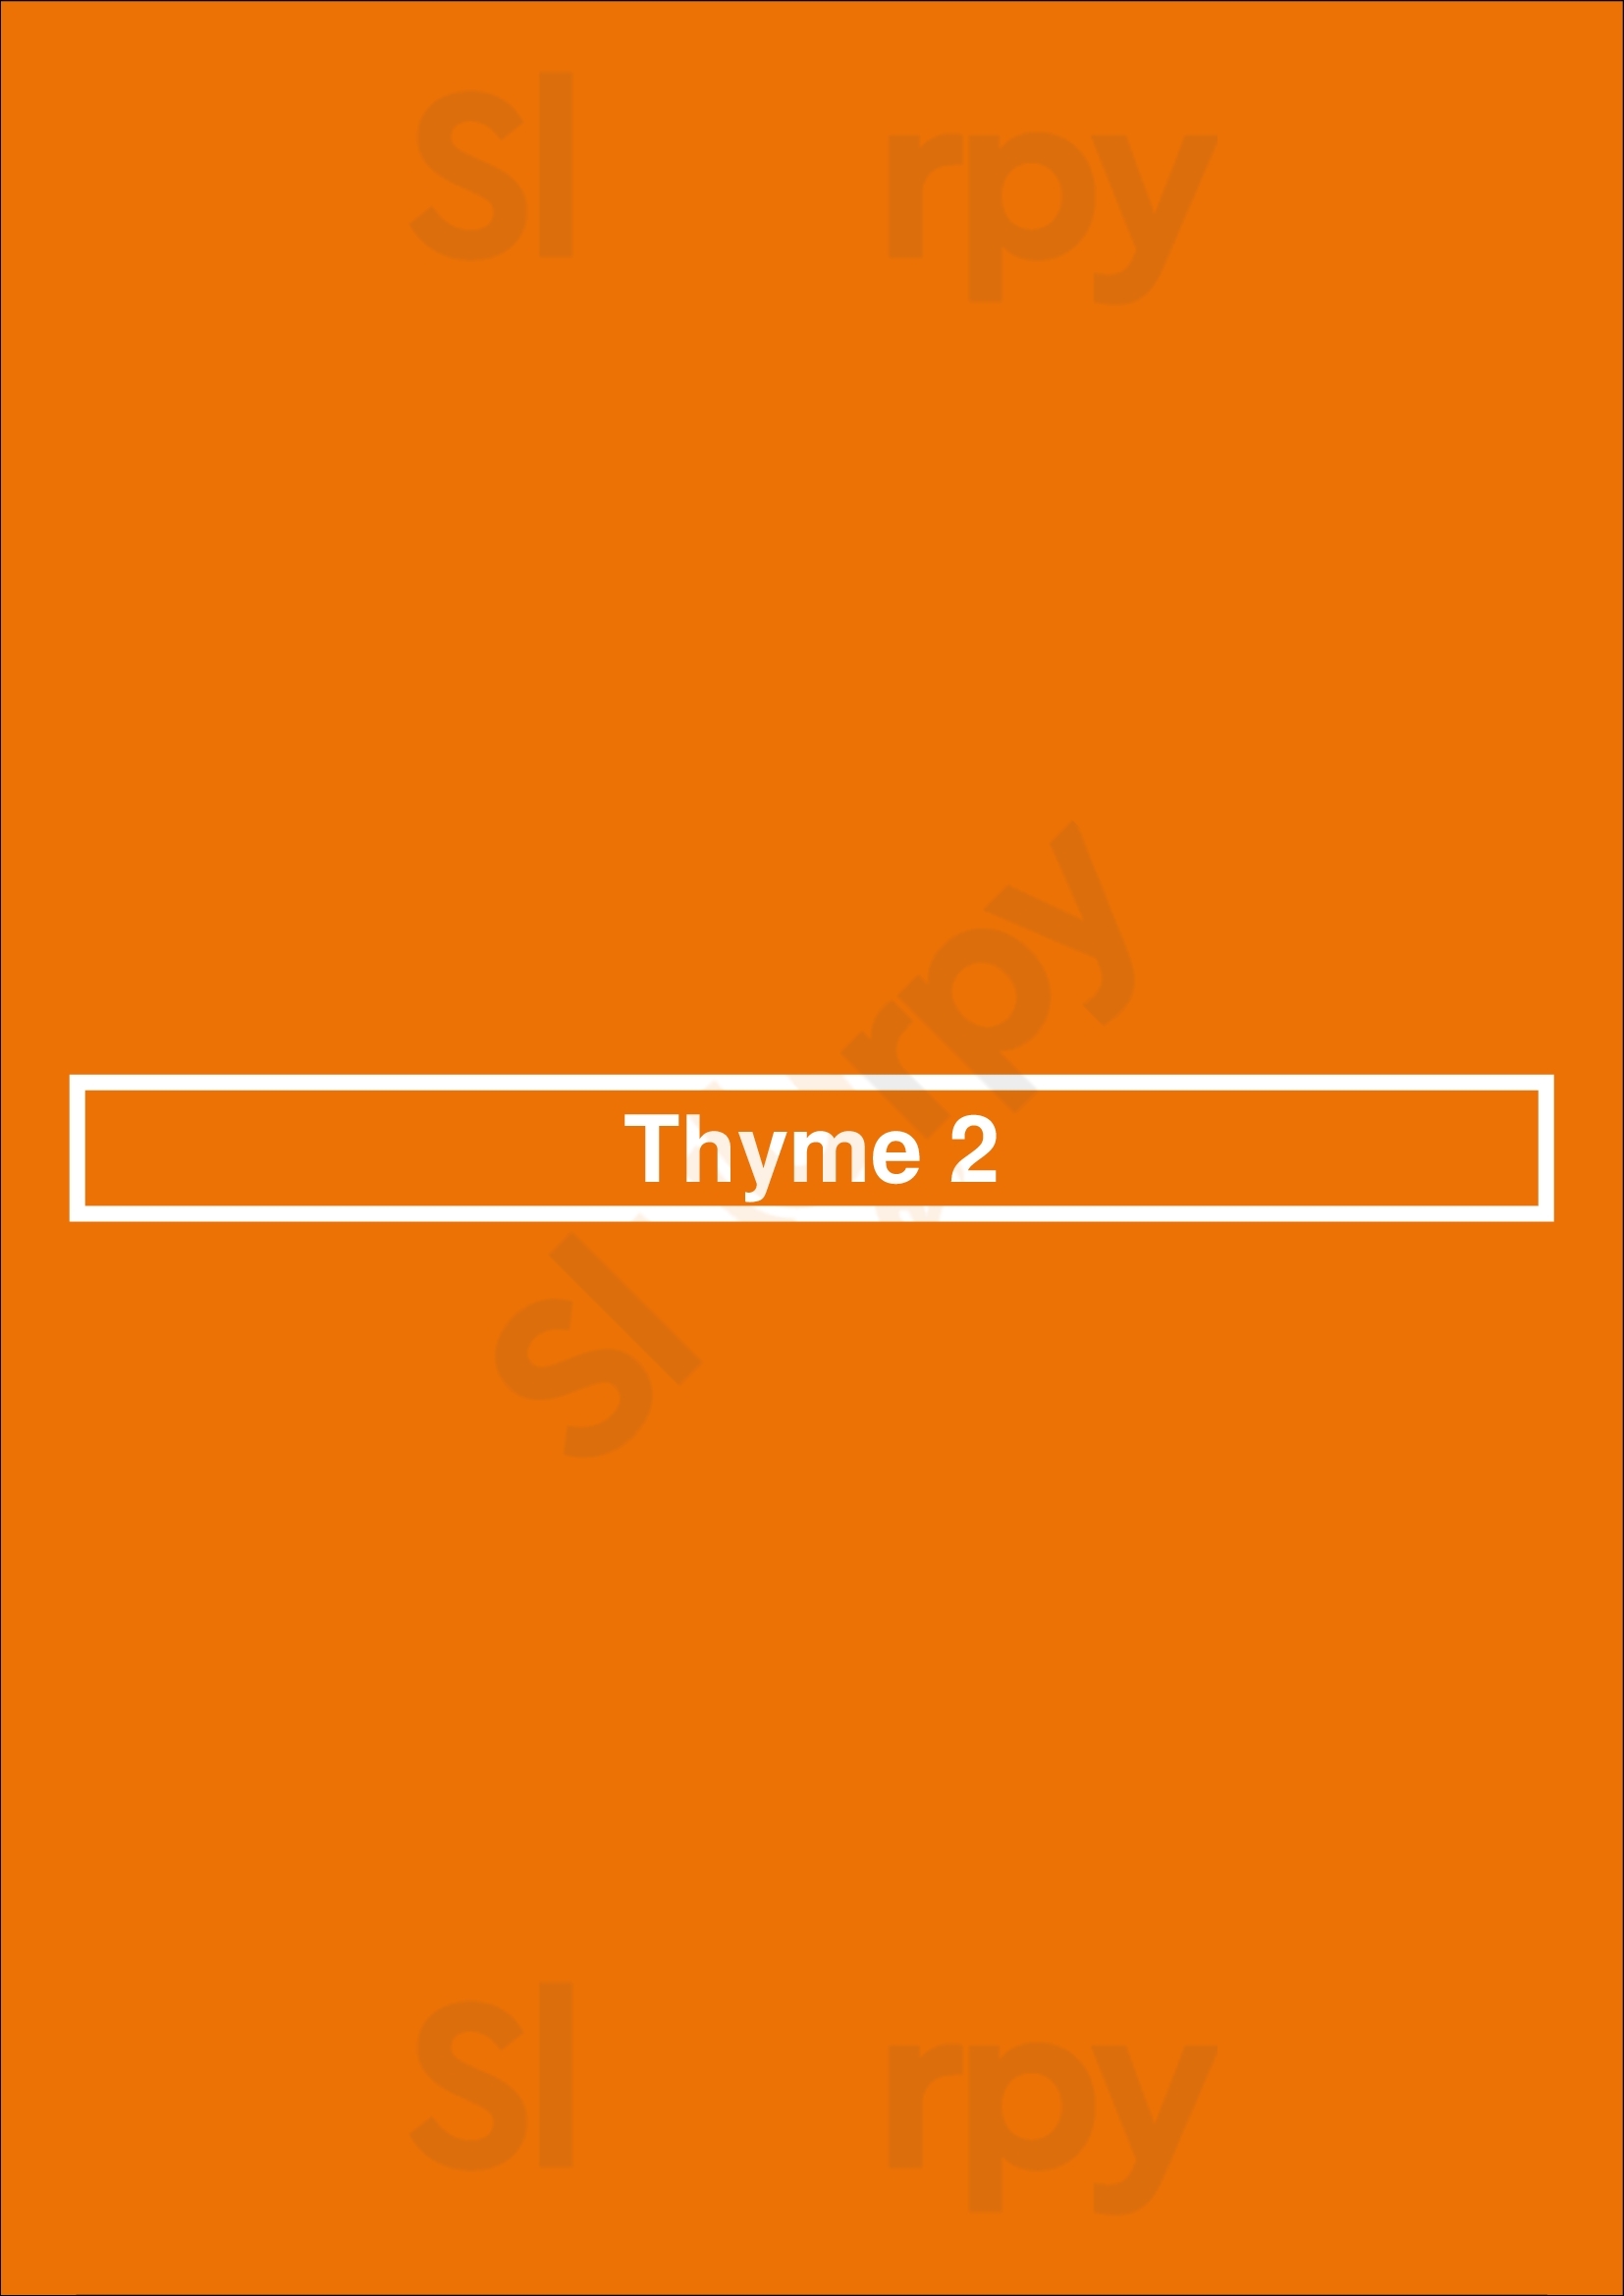 Thyme 2 Brisbane Menu - 1